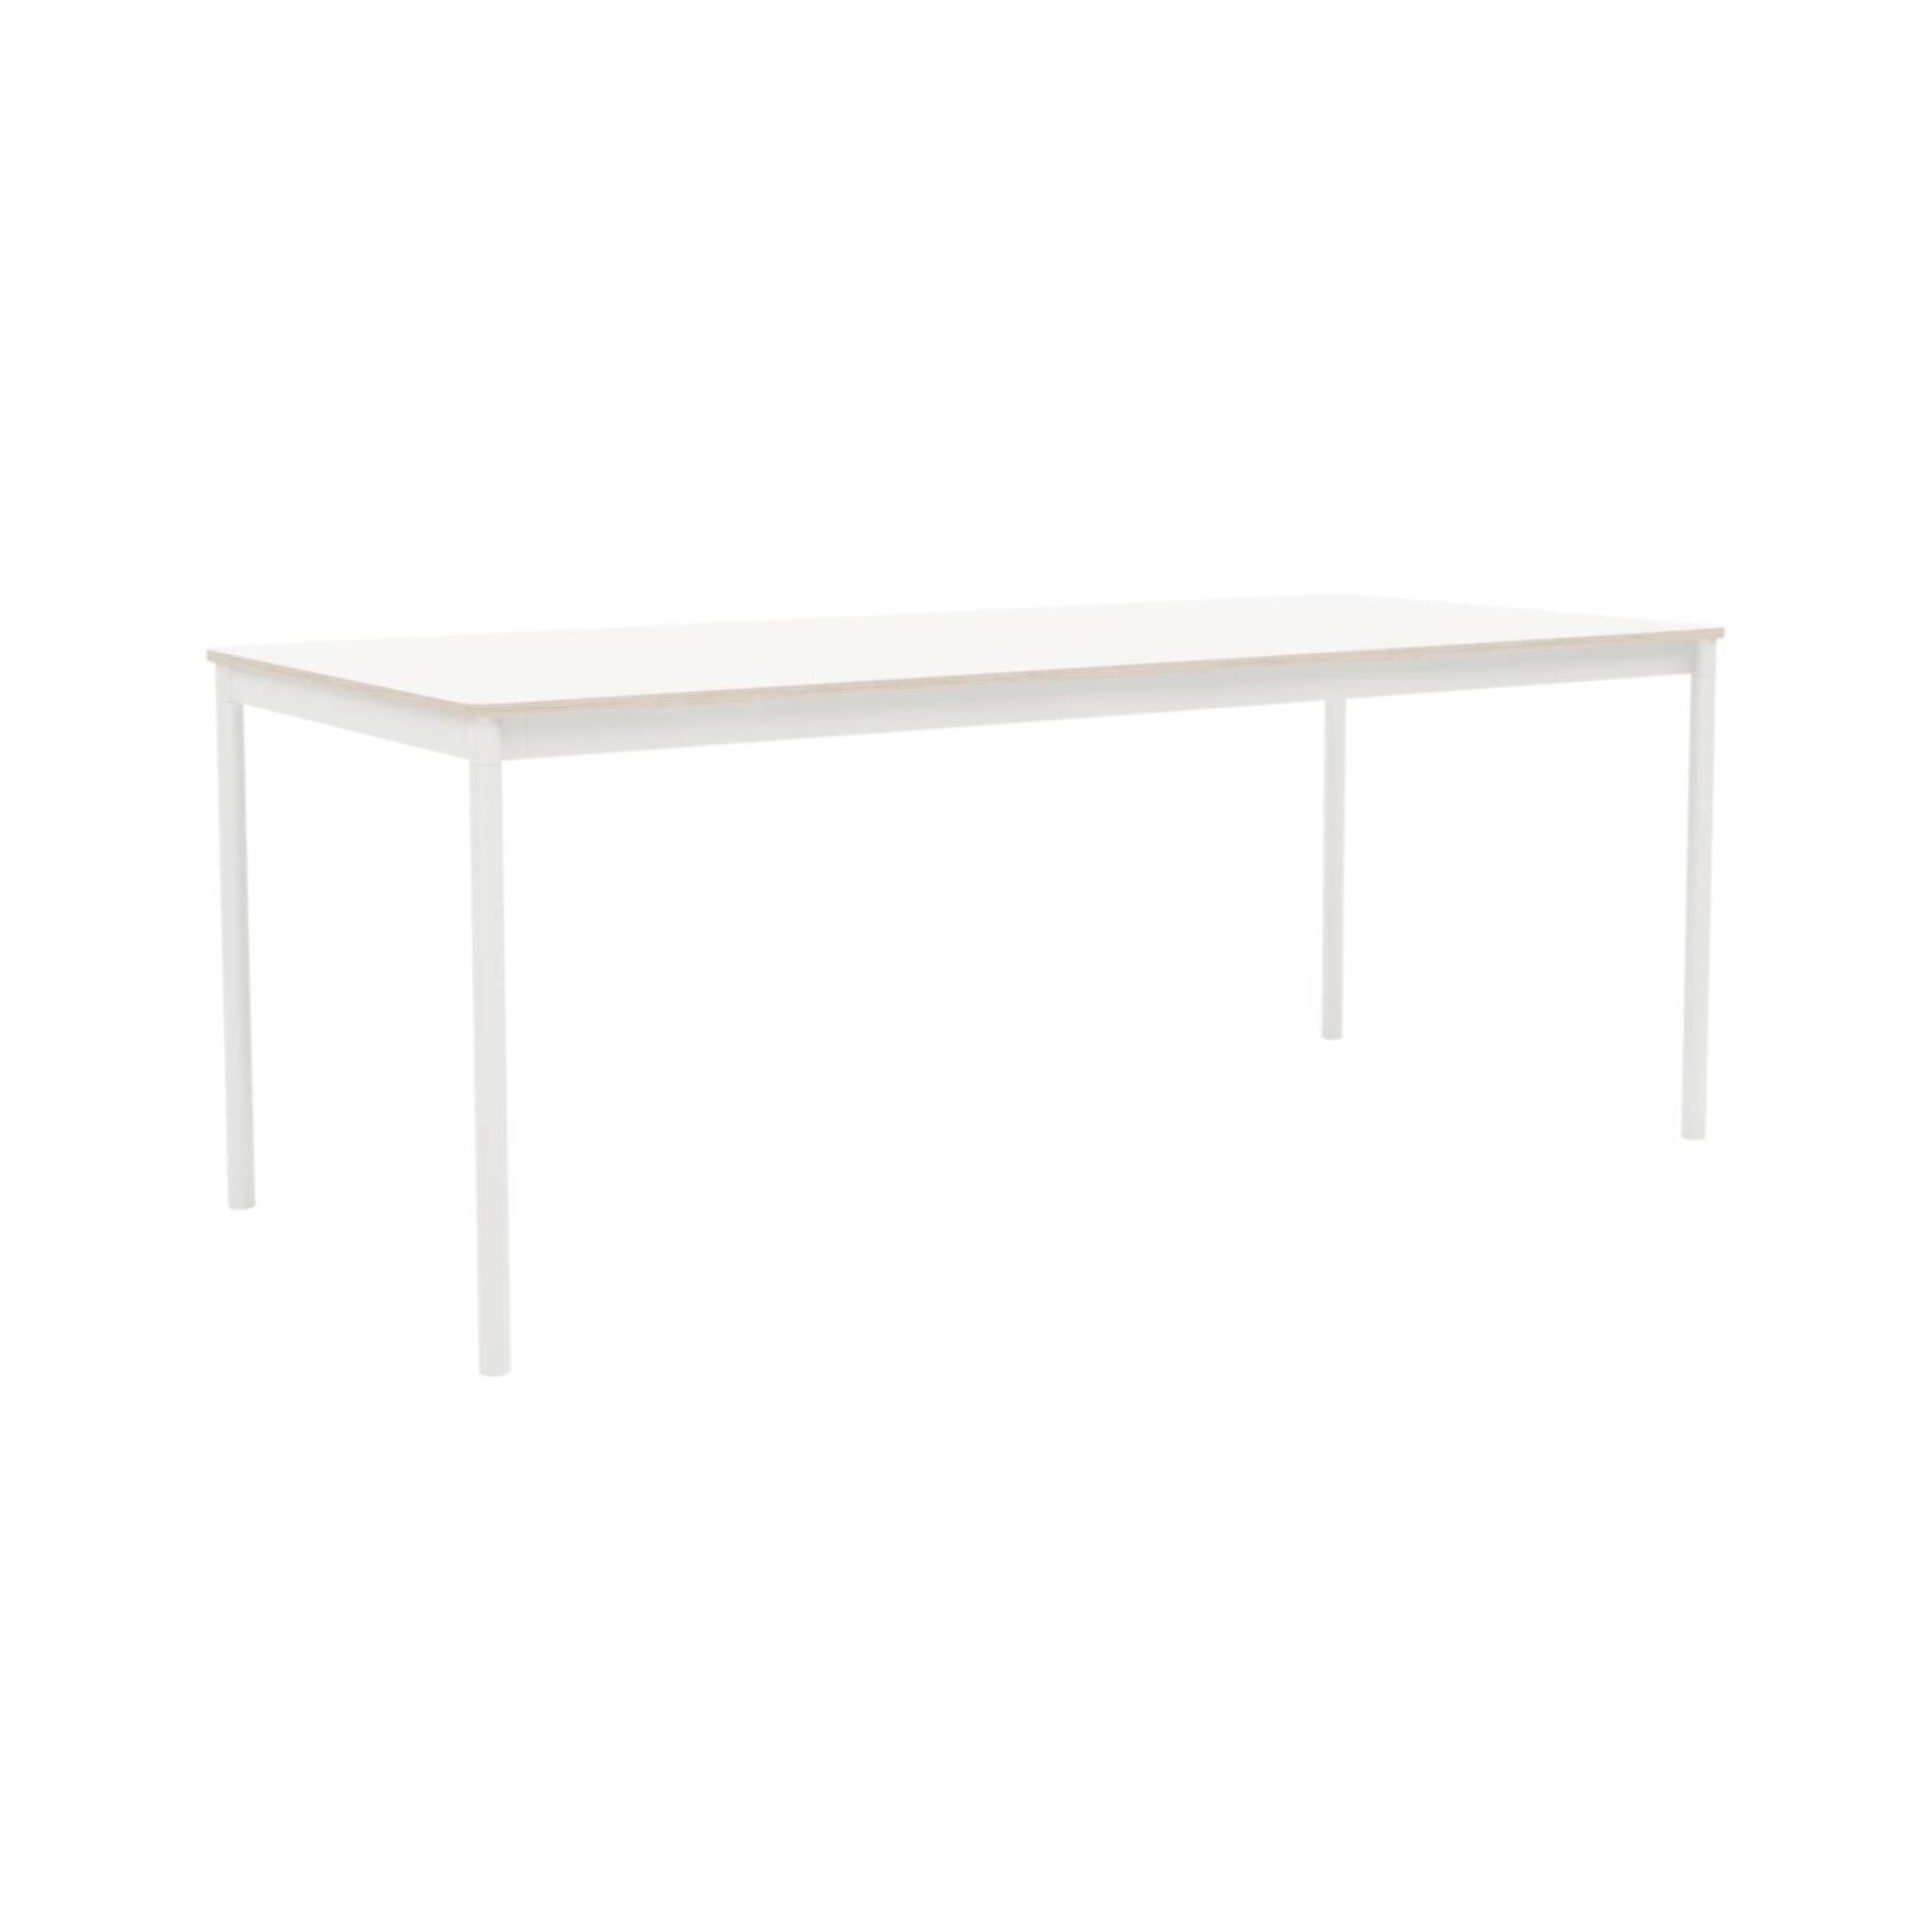 Base Table: Medium + White Laminate + Plywood Edge + White